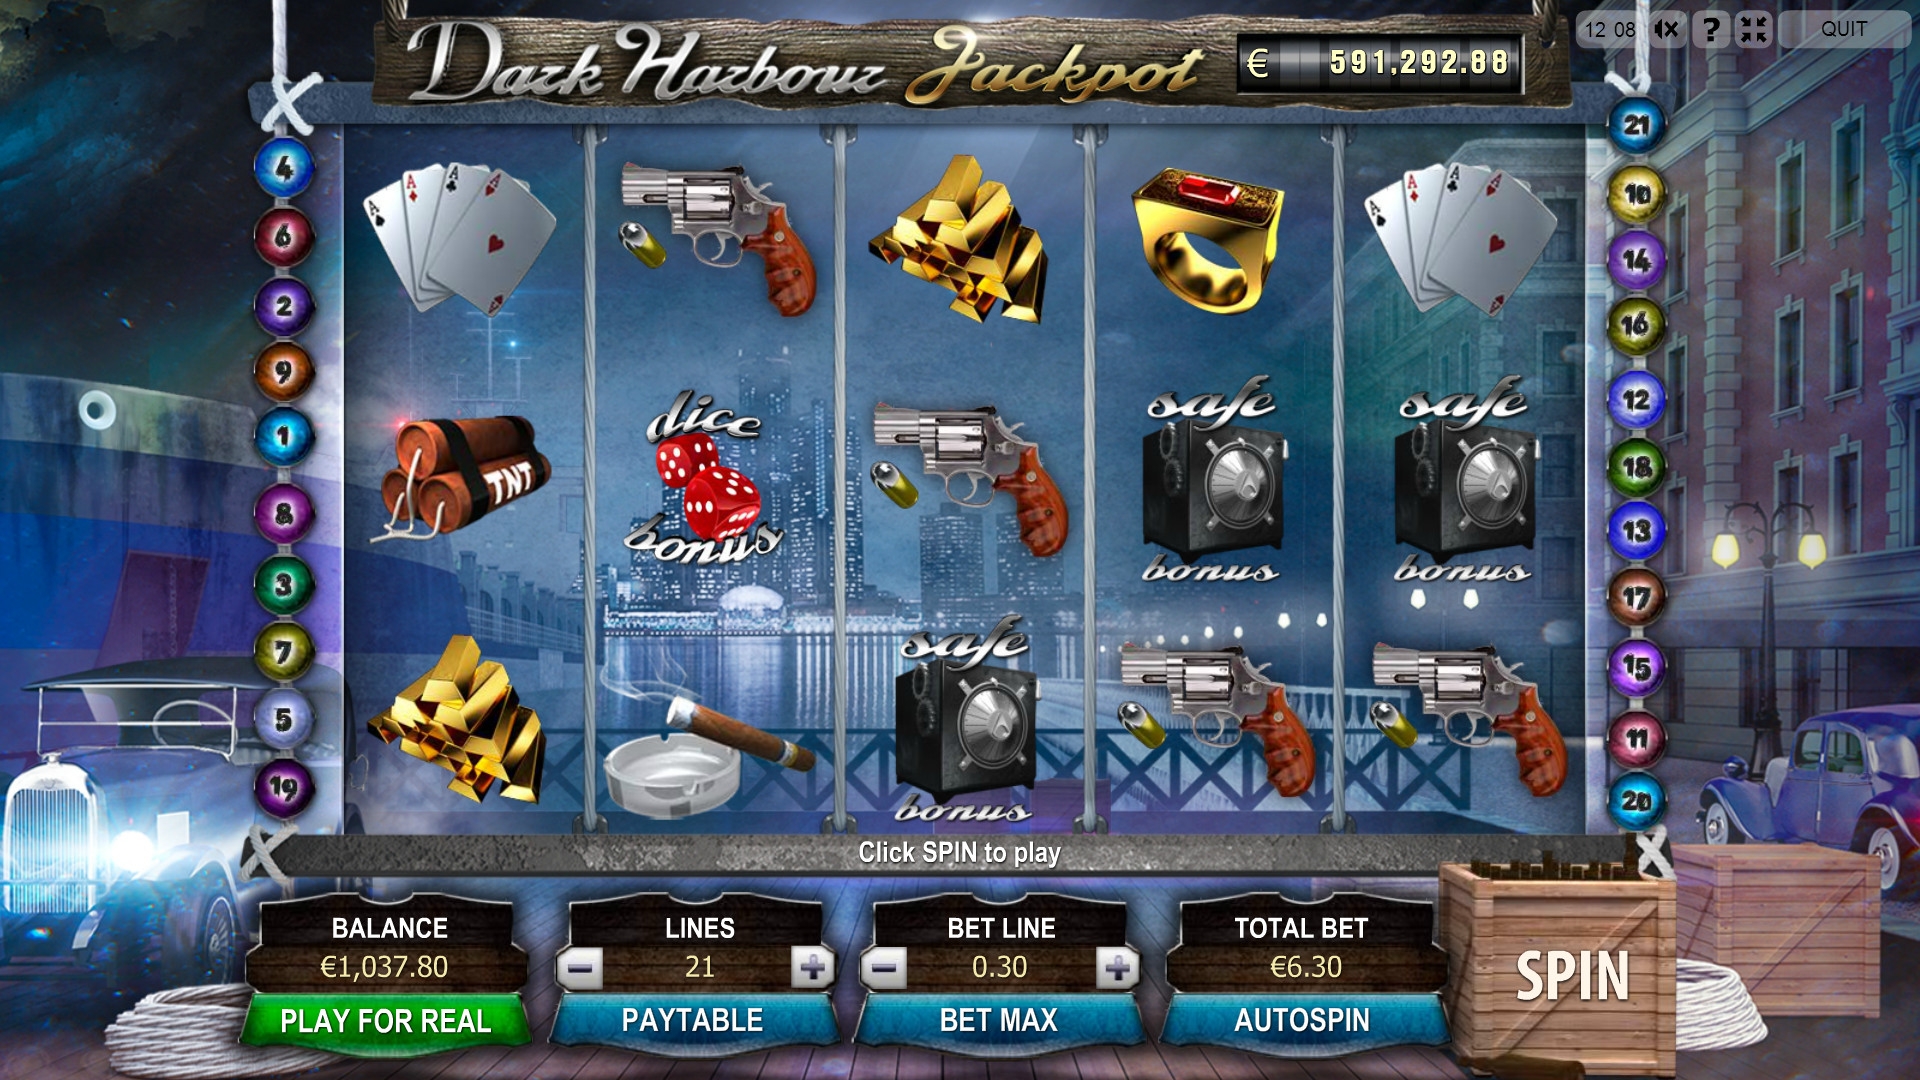 Dark Harbour Jackpot (Dark Harbour Jackpot) from category Slots